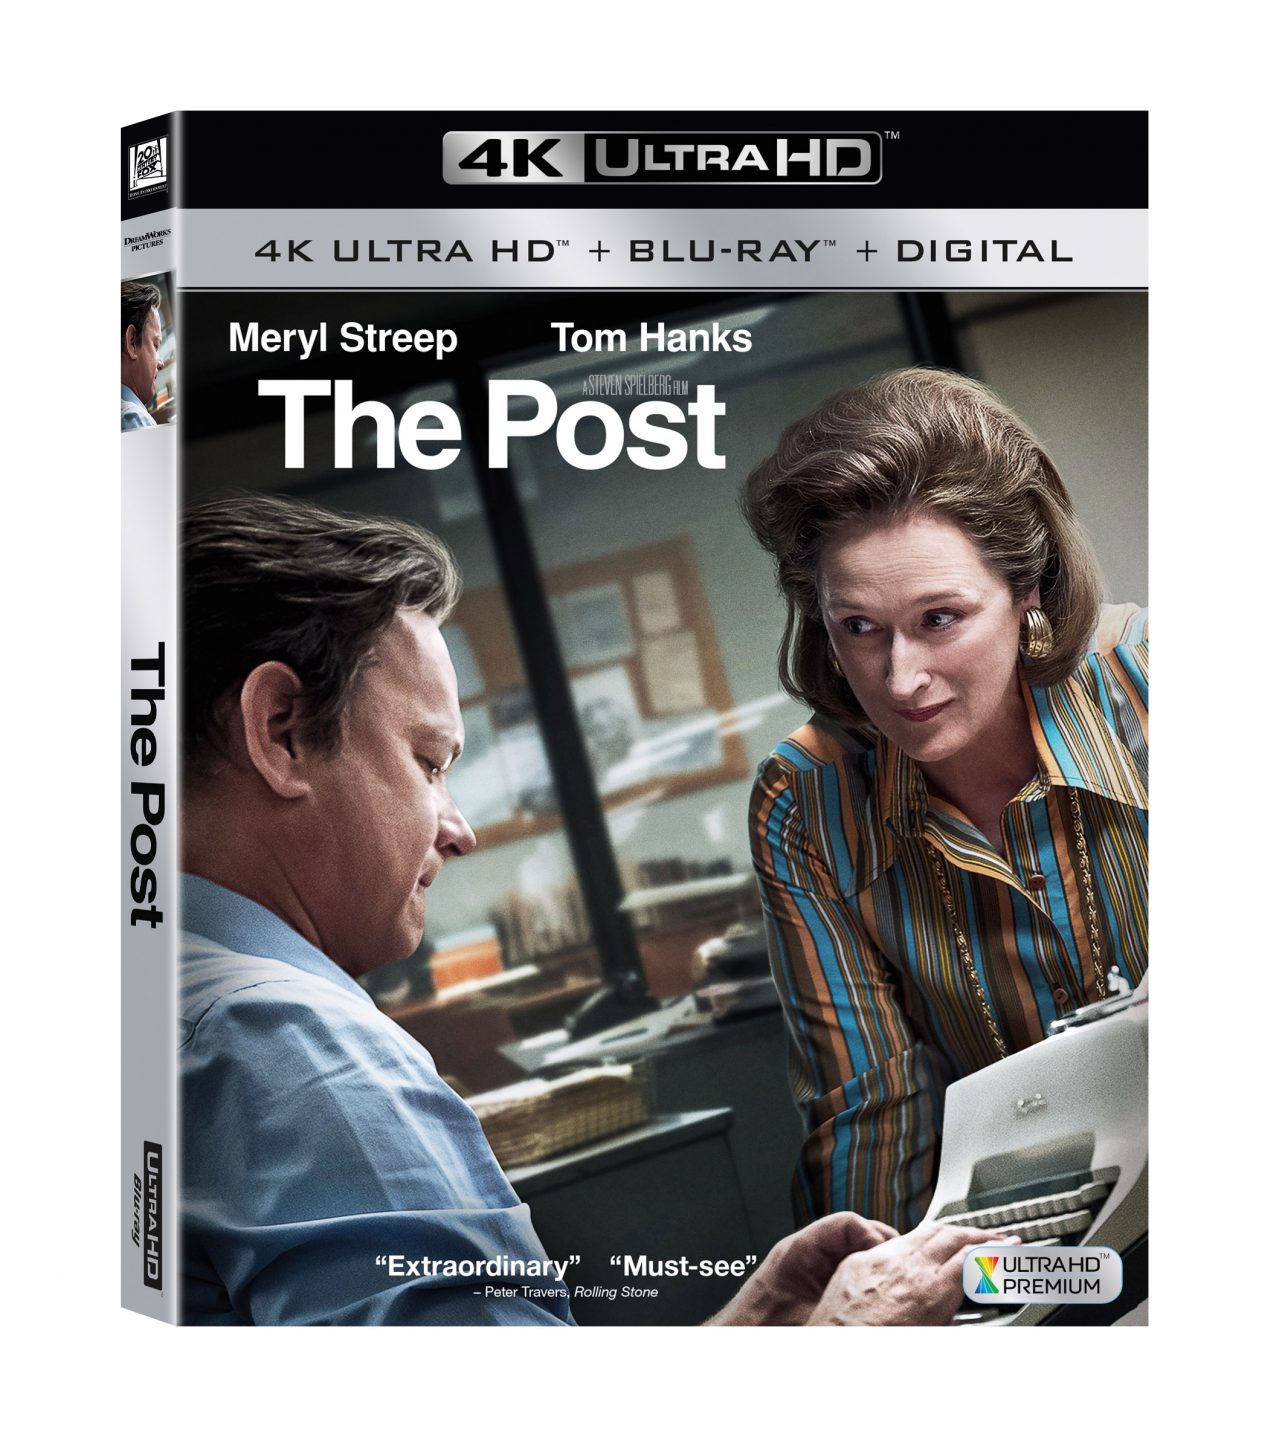 The Post 4K Ultra HD/Blu-Ray/DVD/Digital HD cover (20th Century Fox Home Entertainment)